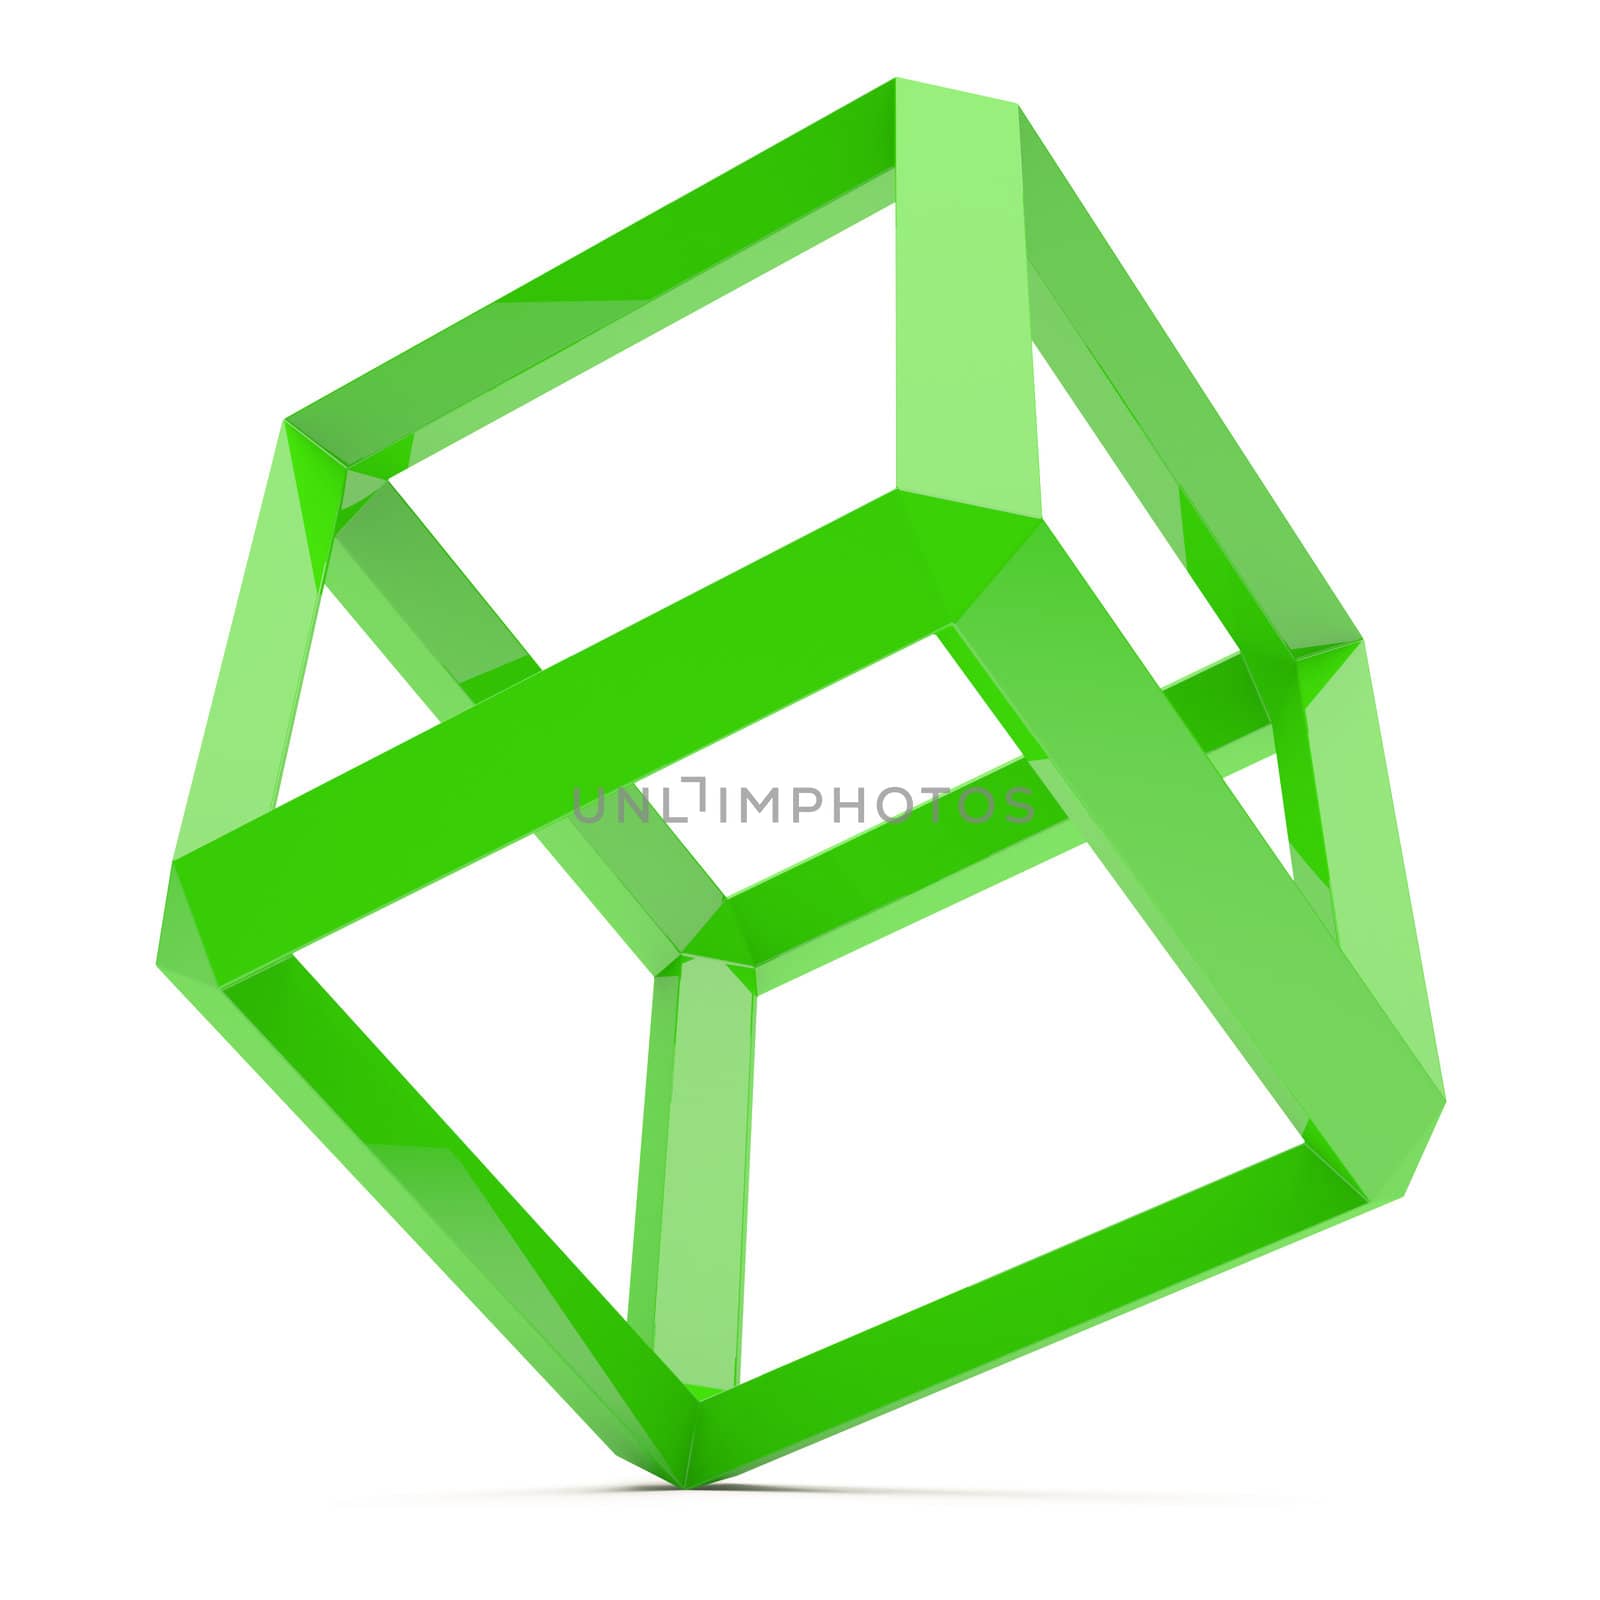 Green Cube by maxkrasnov